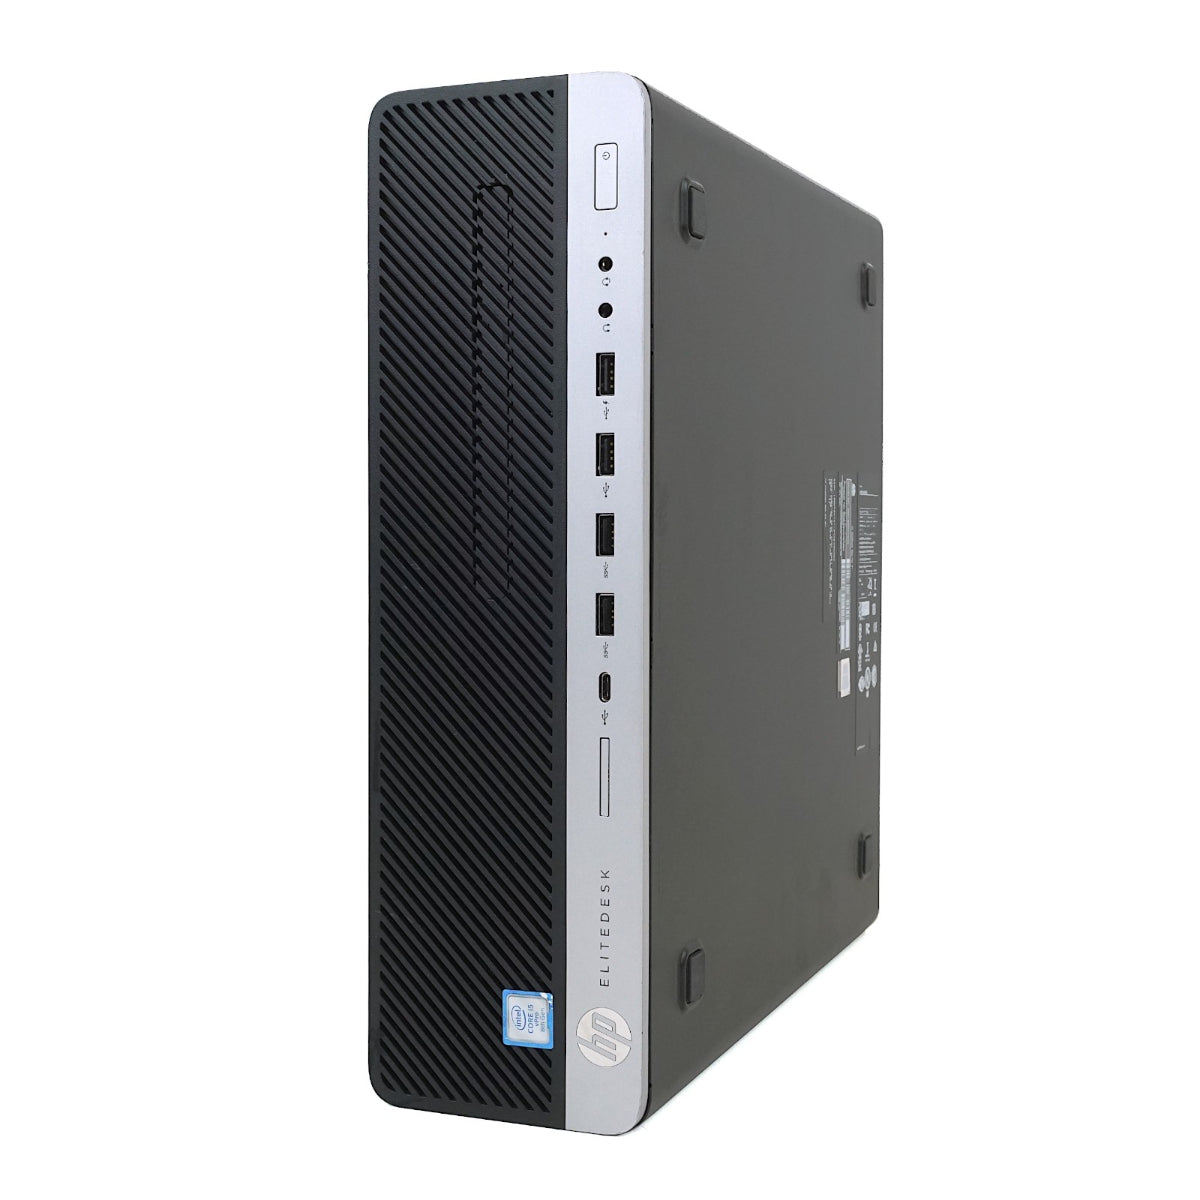 Hewlett Packard EliteDesk 800 G4 I5 8th Gen 3.0 Ghz Six Core PC Unit